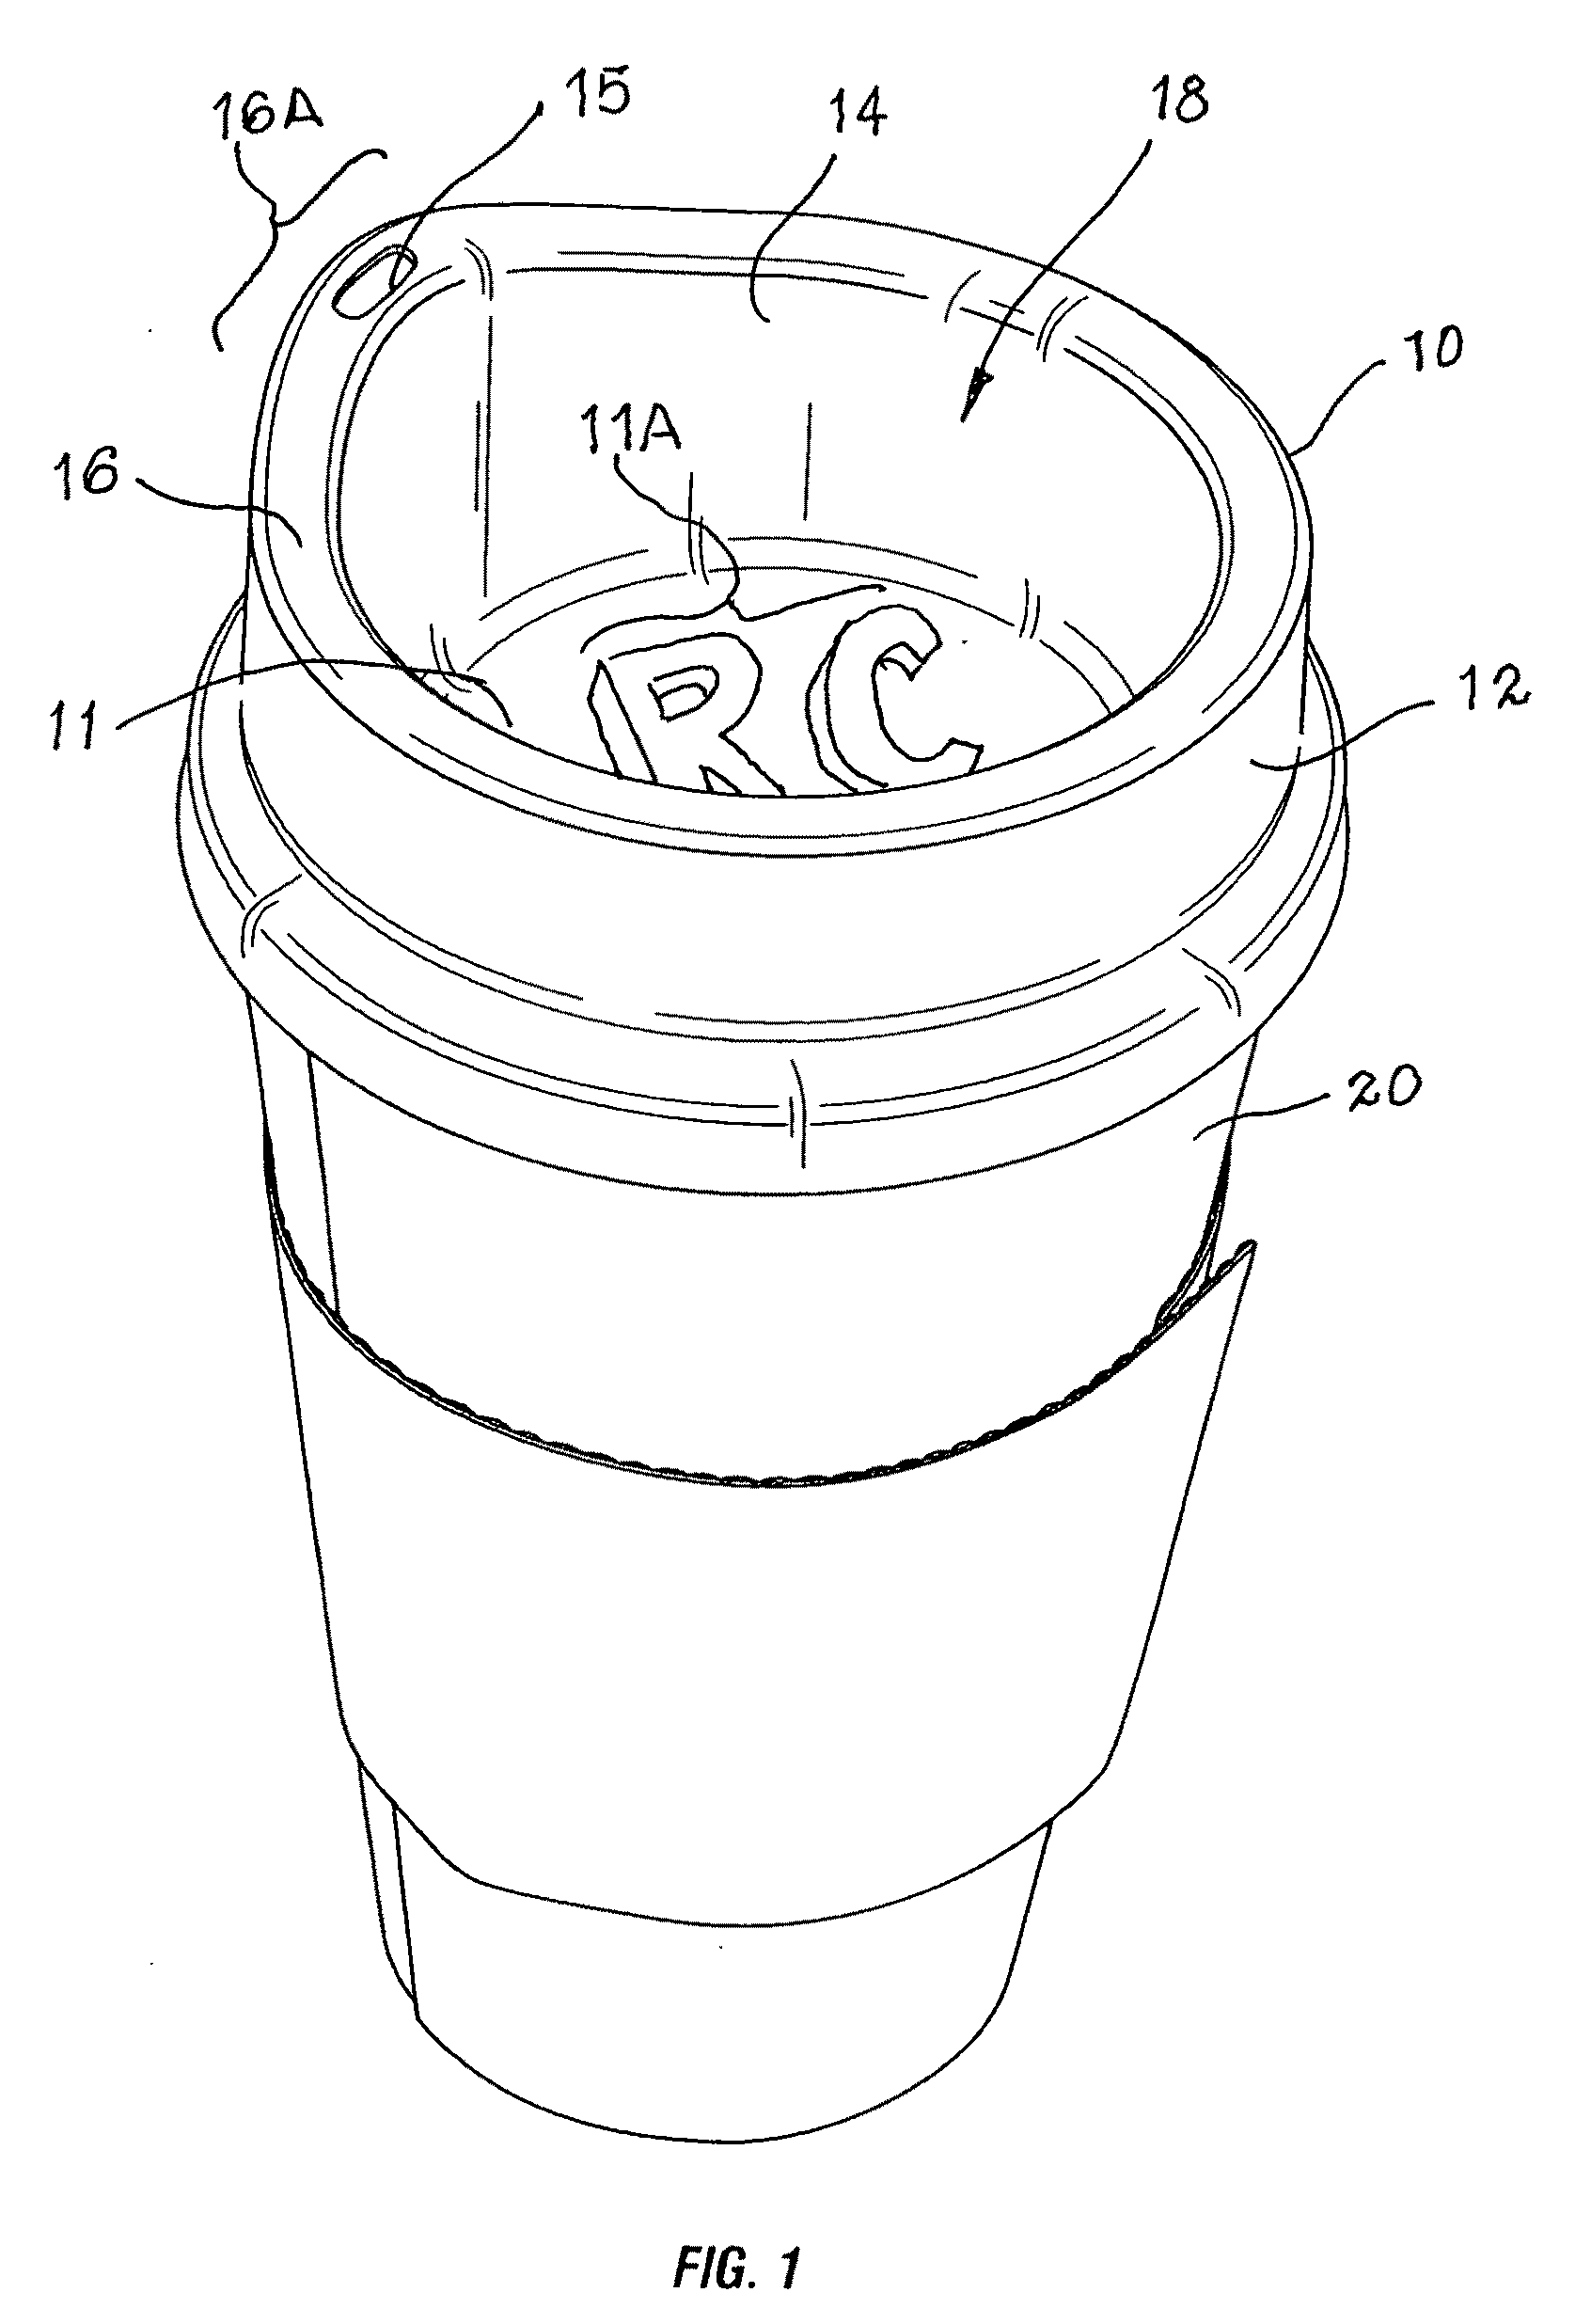 Cup lid with an anti-splash ergonomic shape